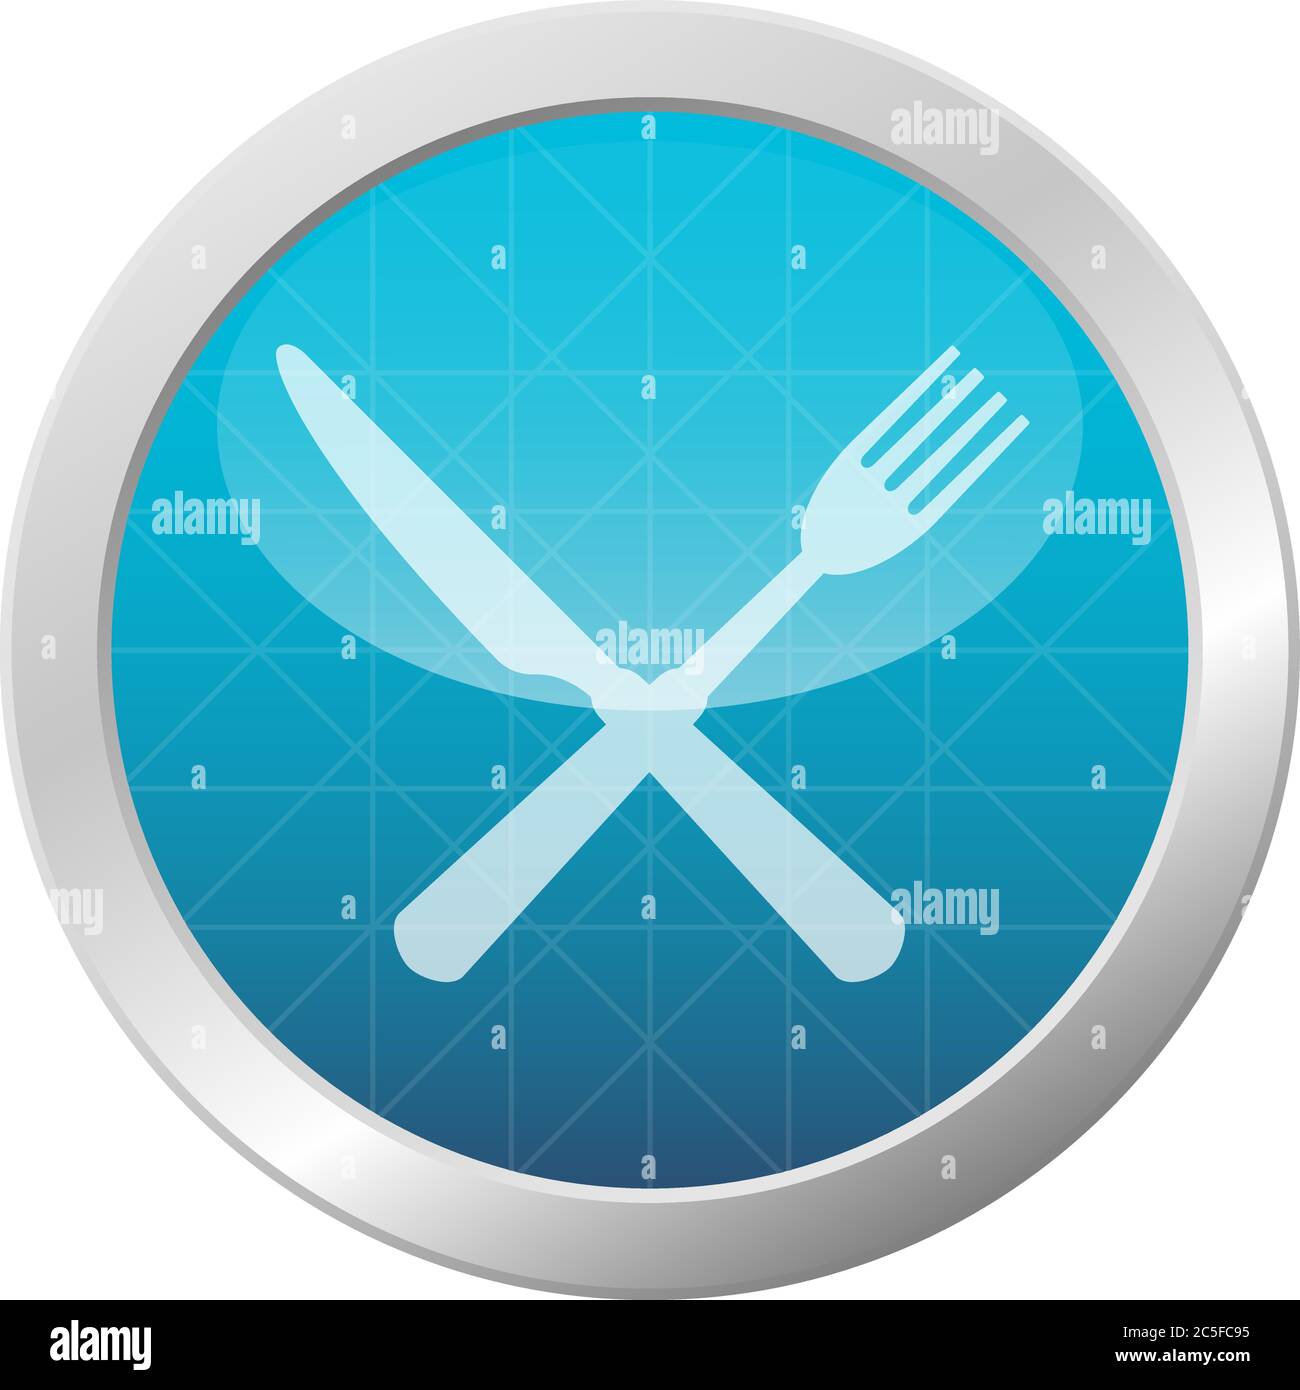 Messer Und Gabel Symbol Vektor Illustration Restaurant Lebensmittel Besteck Symbol Auf Hellblau Glänzenden Kreis Rahmen Stock Vektor